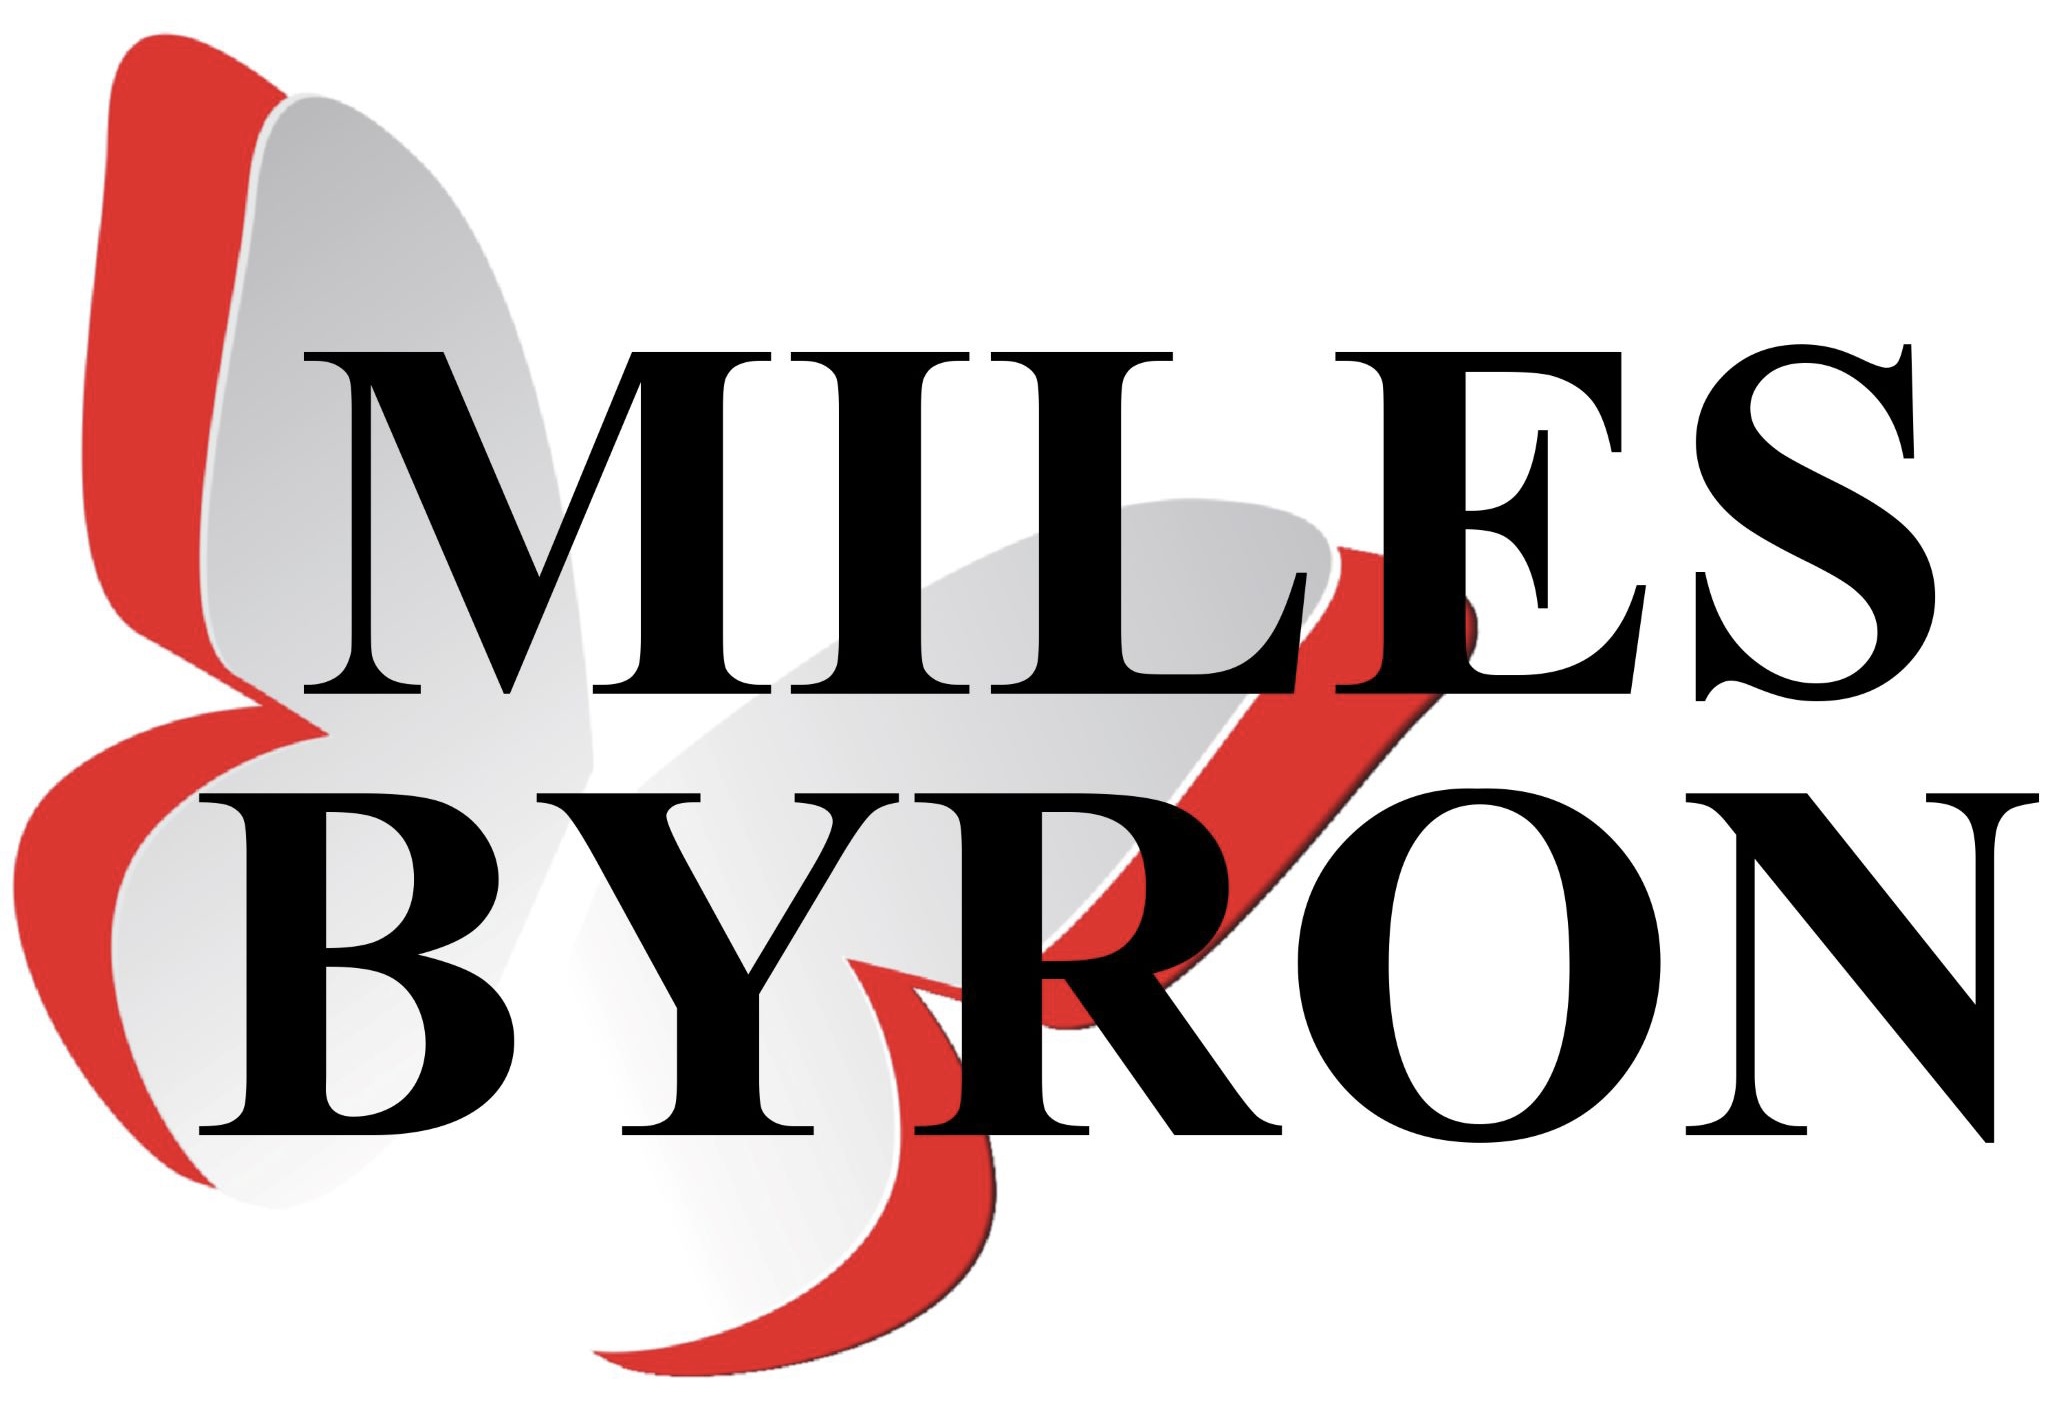 Miles Byron